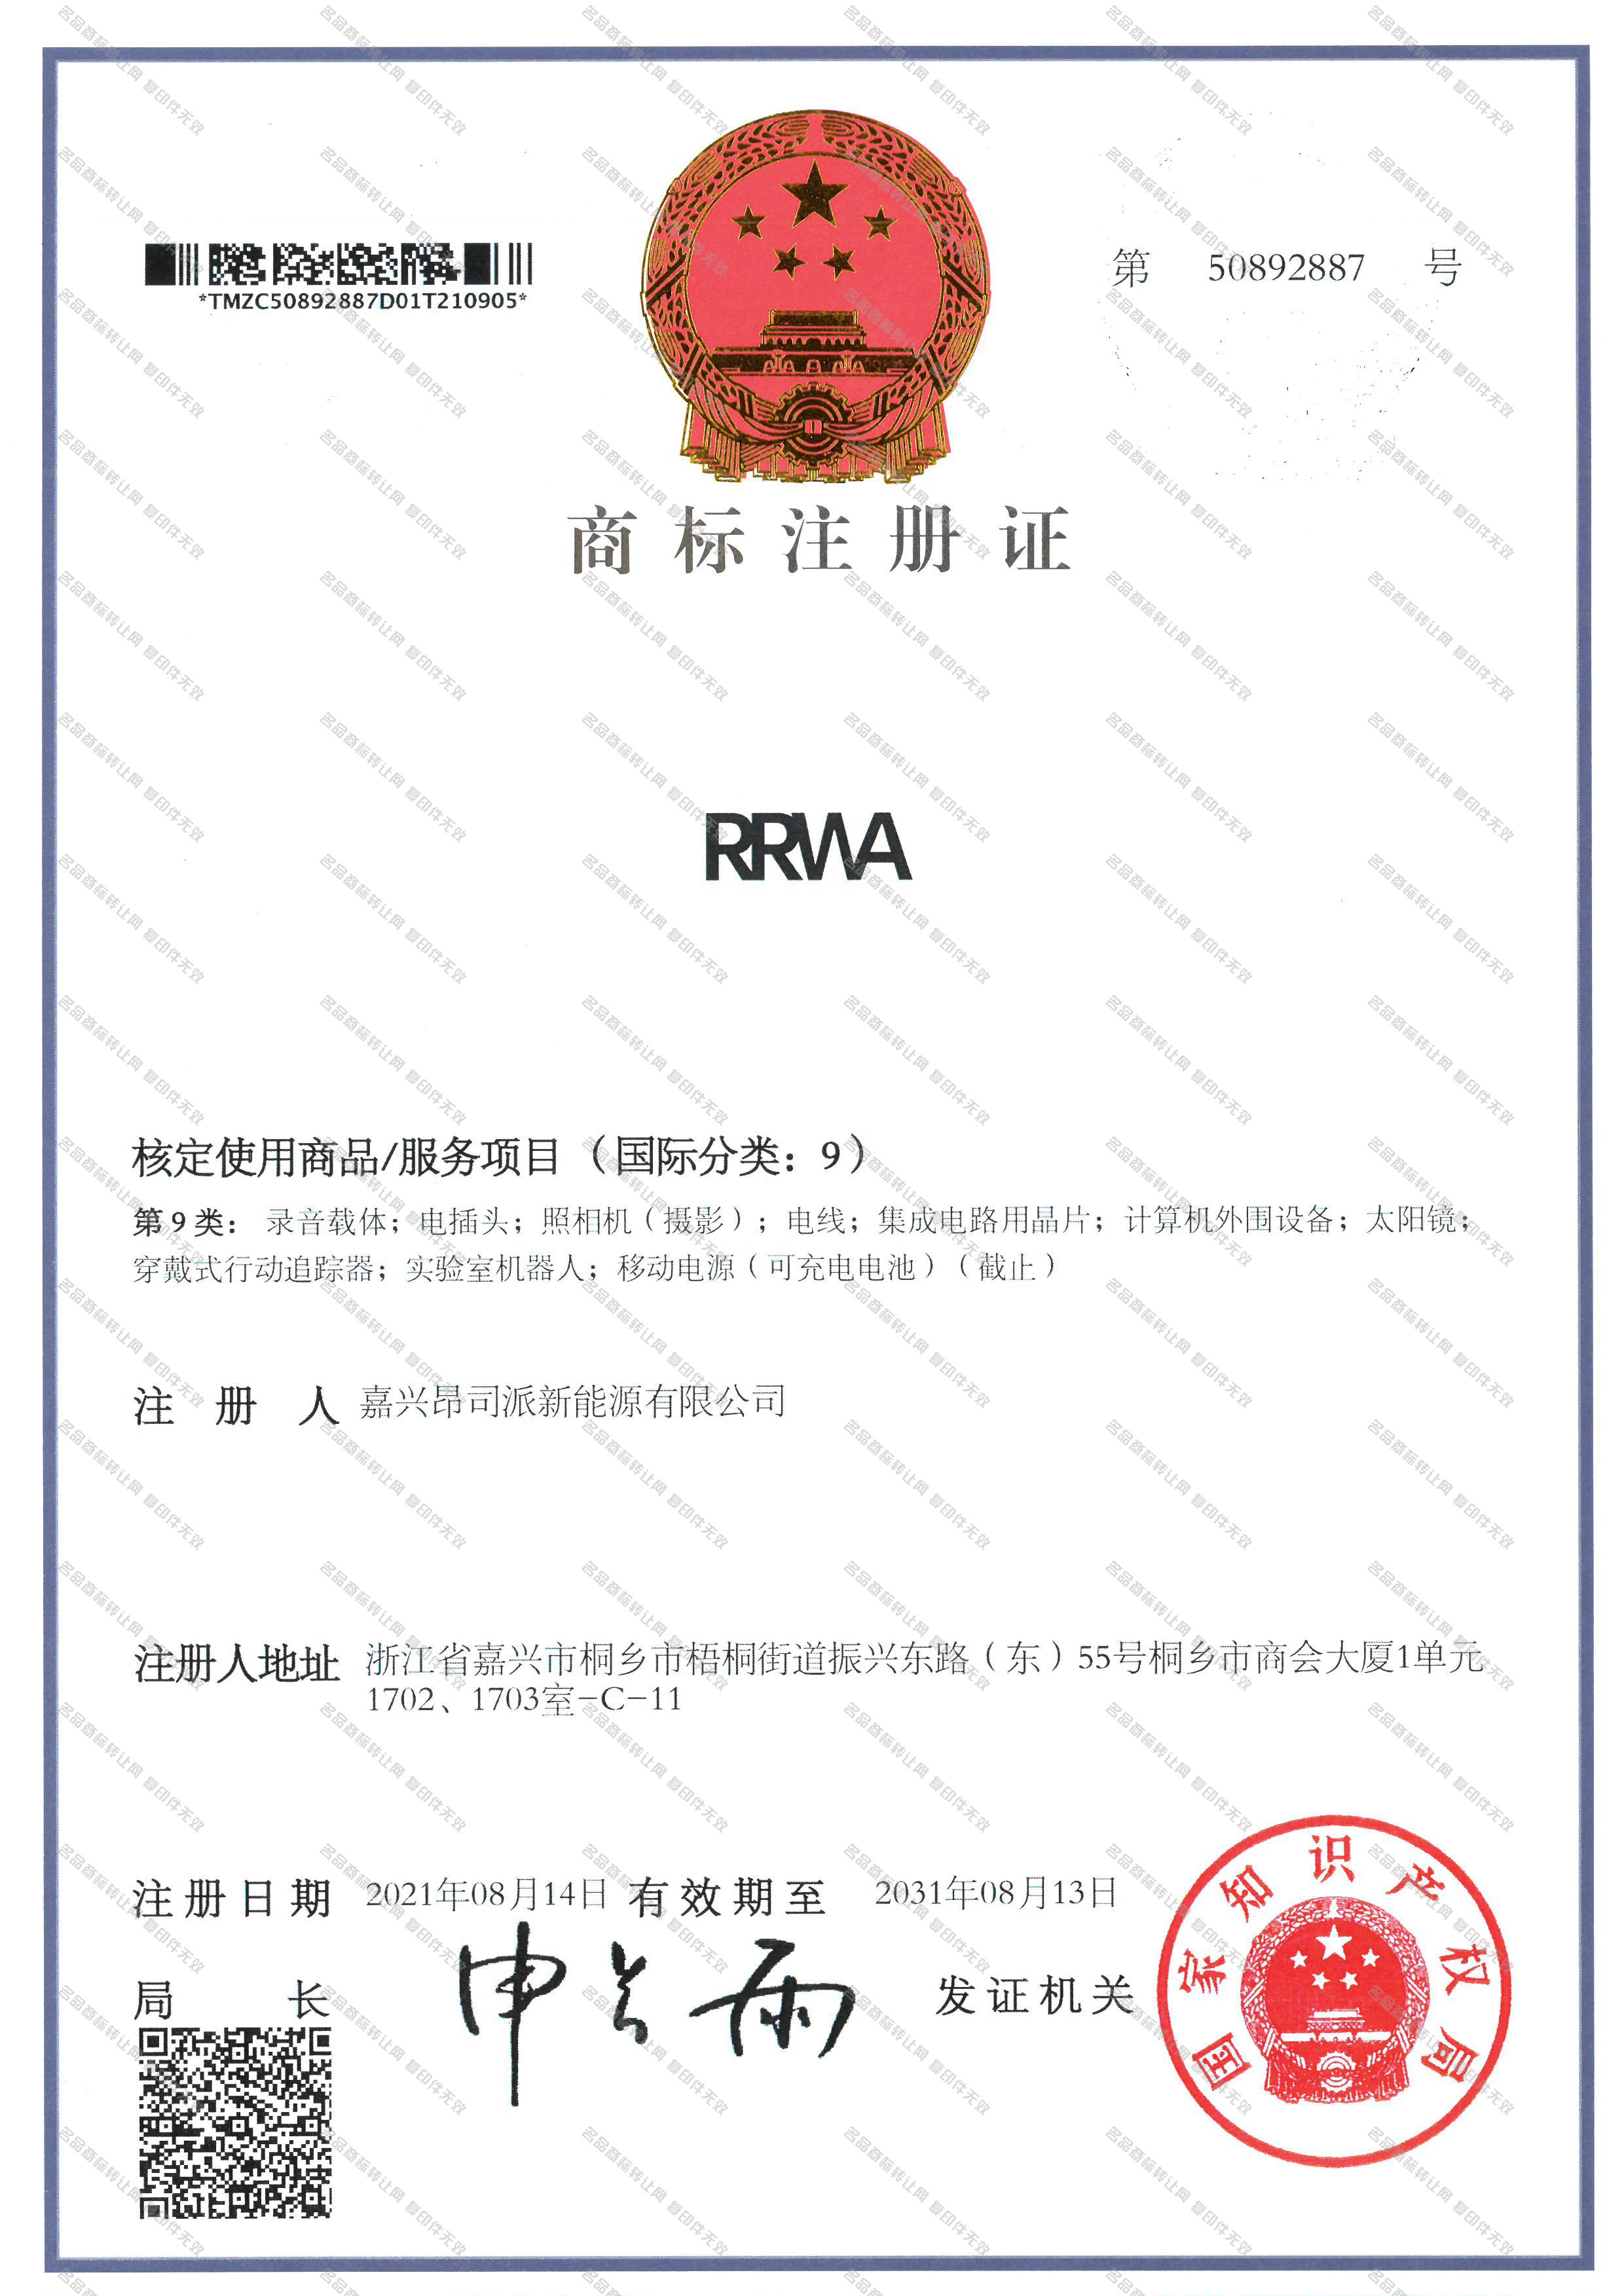 RRWA注册证